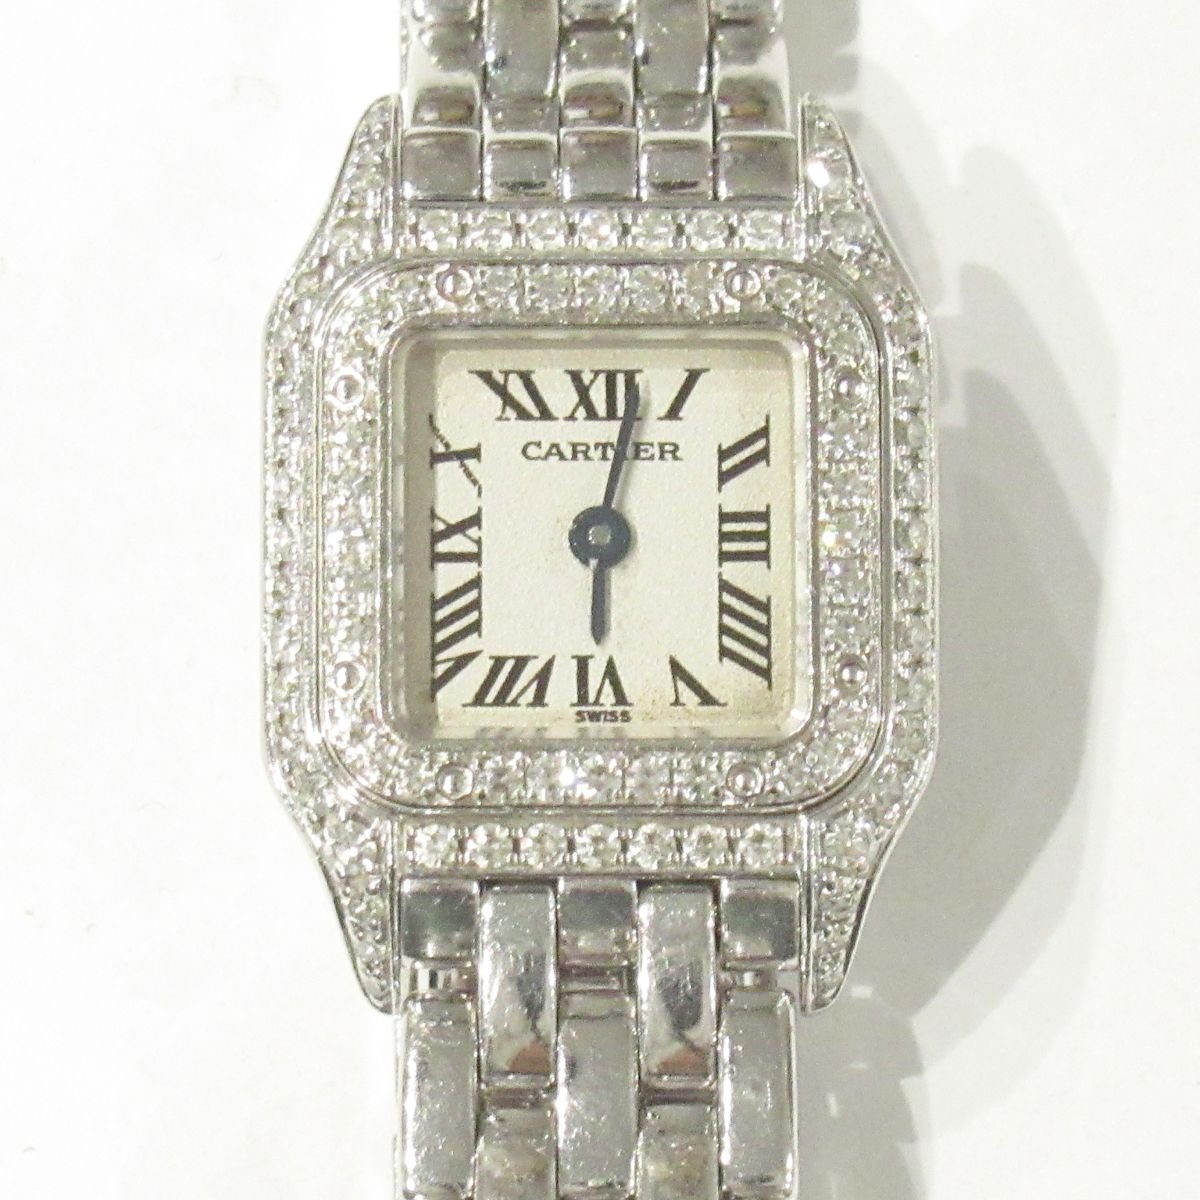  beautiful goods Cartier Cartier 2 -ply bezel diamond Mini Panthere de Cartier square form wristwatch K18WG 750 46.2g silver *